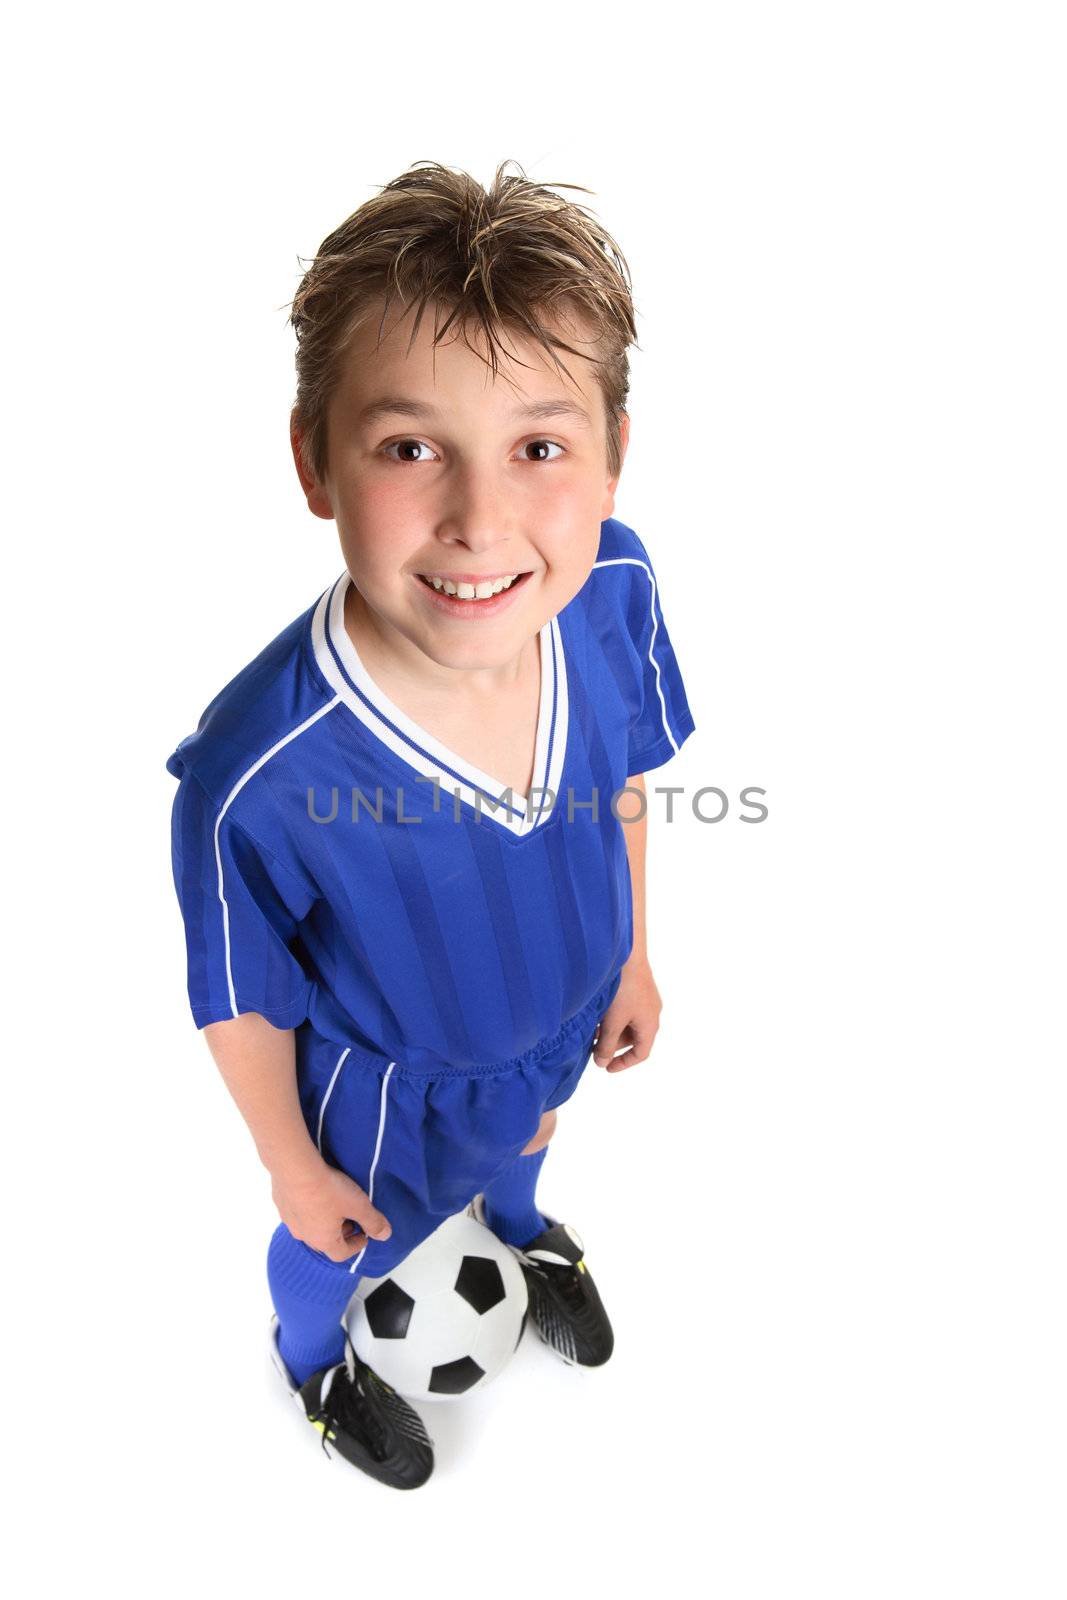 Boy wth soccer ball by lovleah